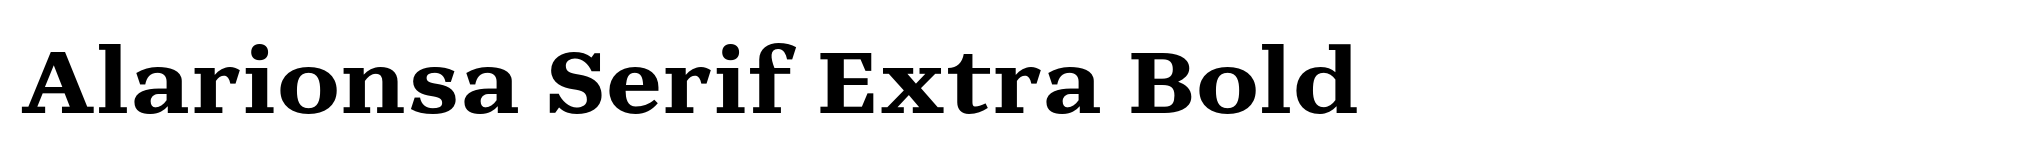 Alarionsa Serif Extra Bold image